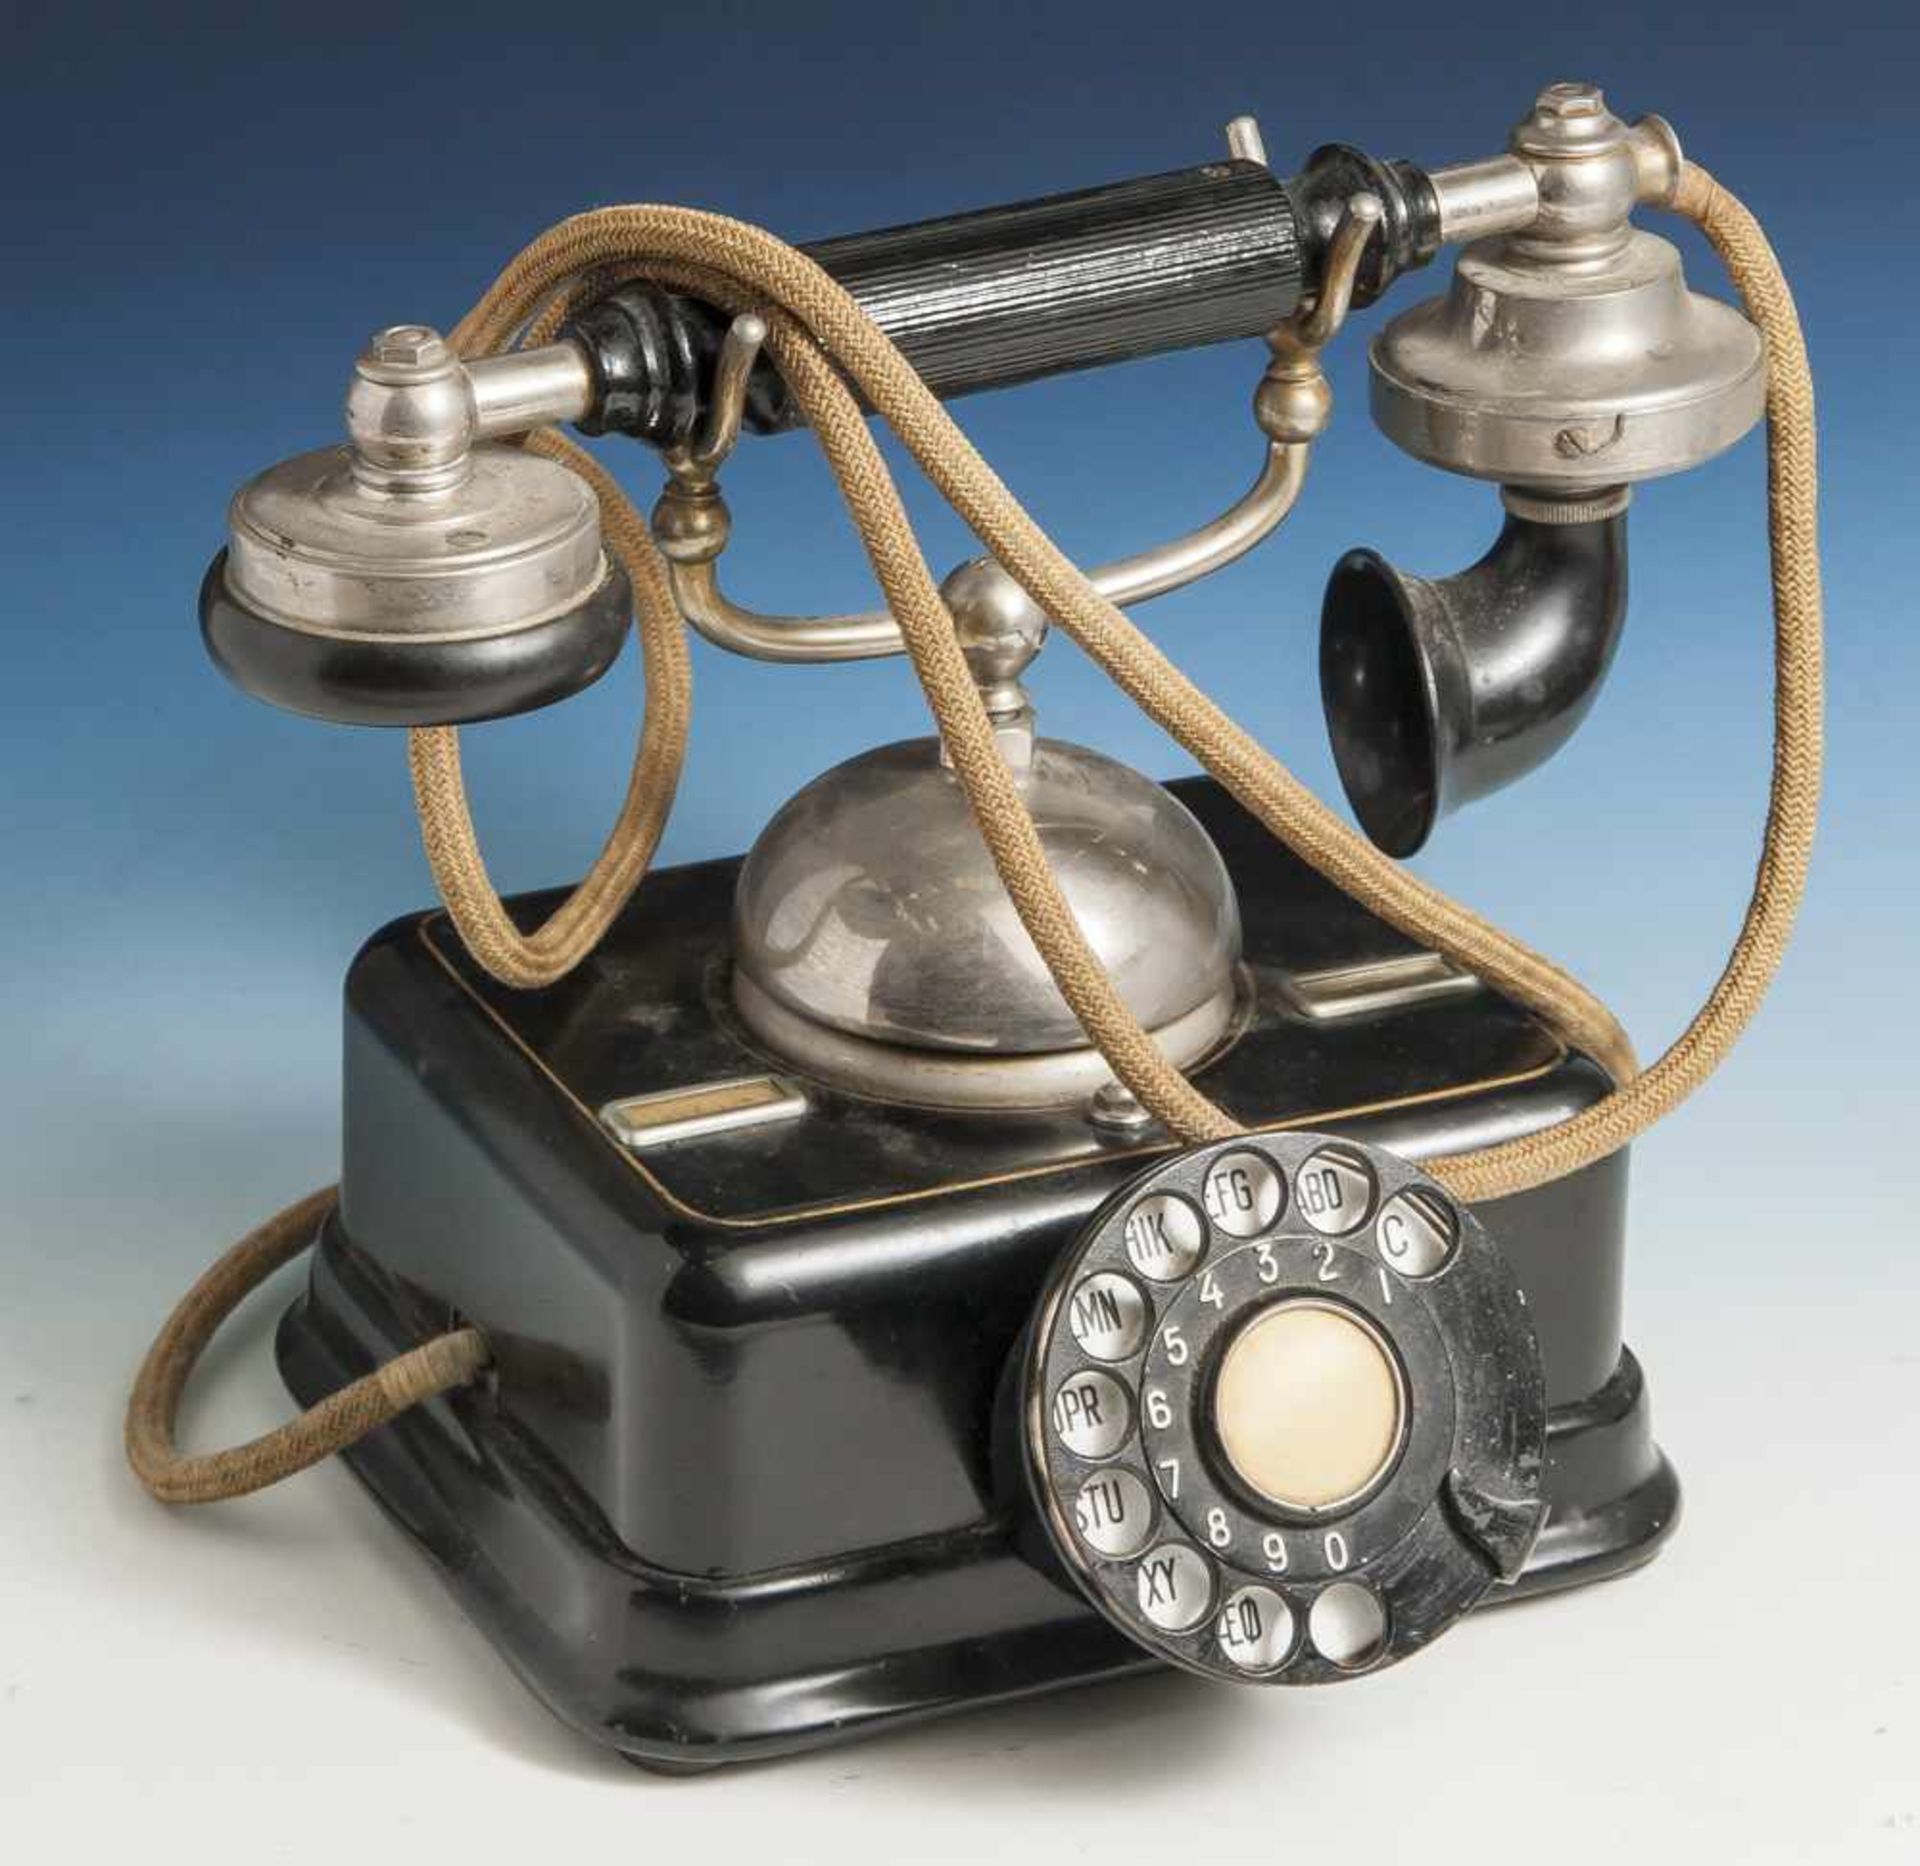 Altes Telefon, Dänemark, wohl um 1900, KTAS, Unterboden u. Sprechmuschel bez. "KjøbenhavnsTelefon